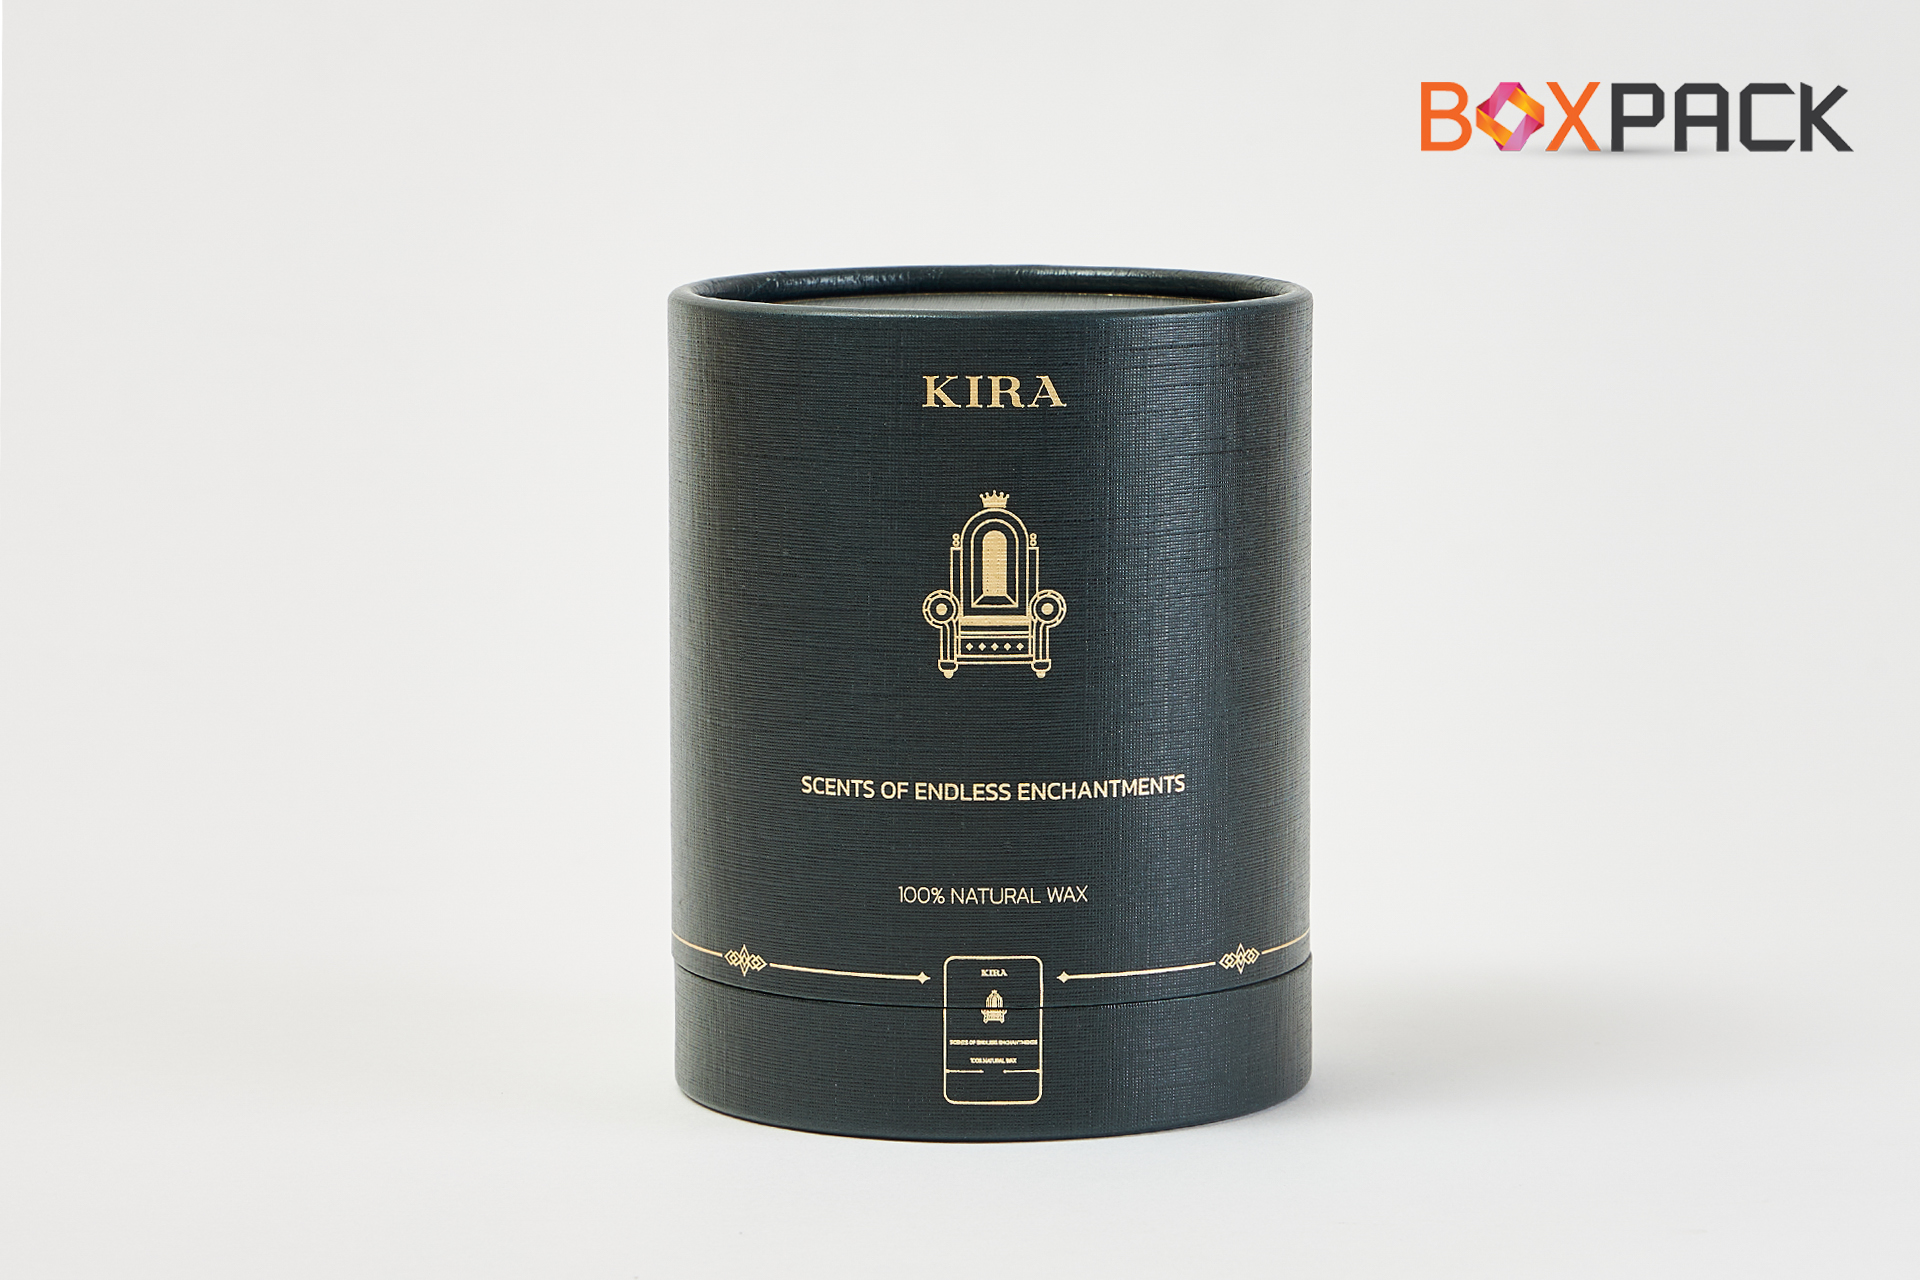 Kira-Boxpack01.jpg